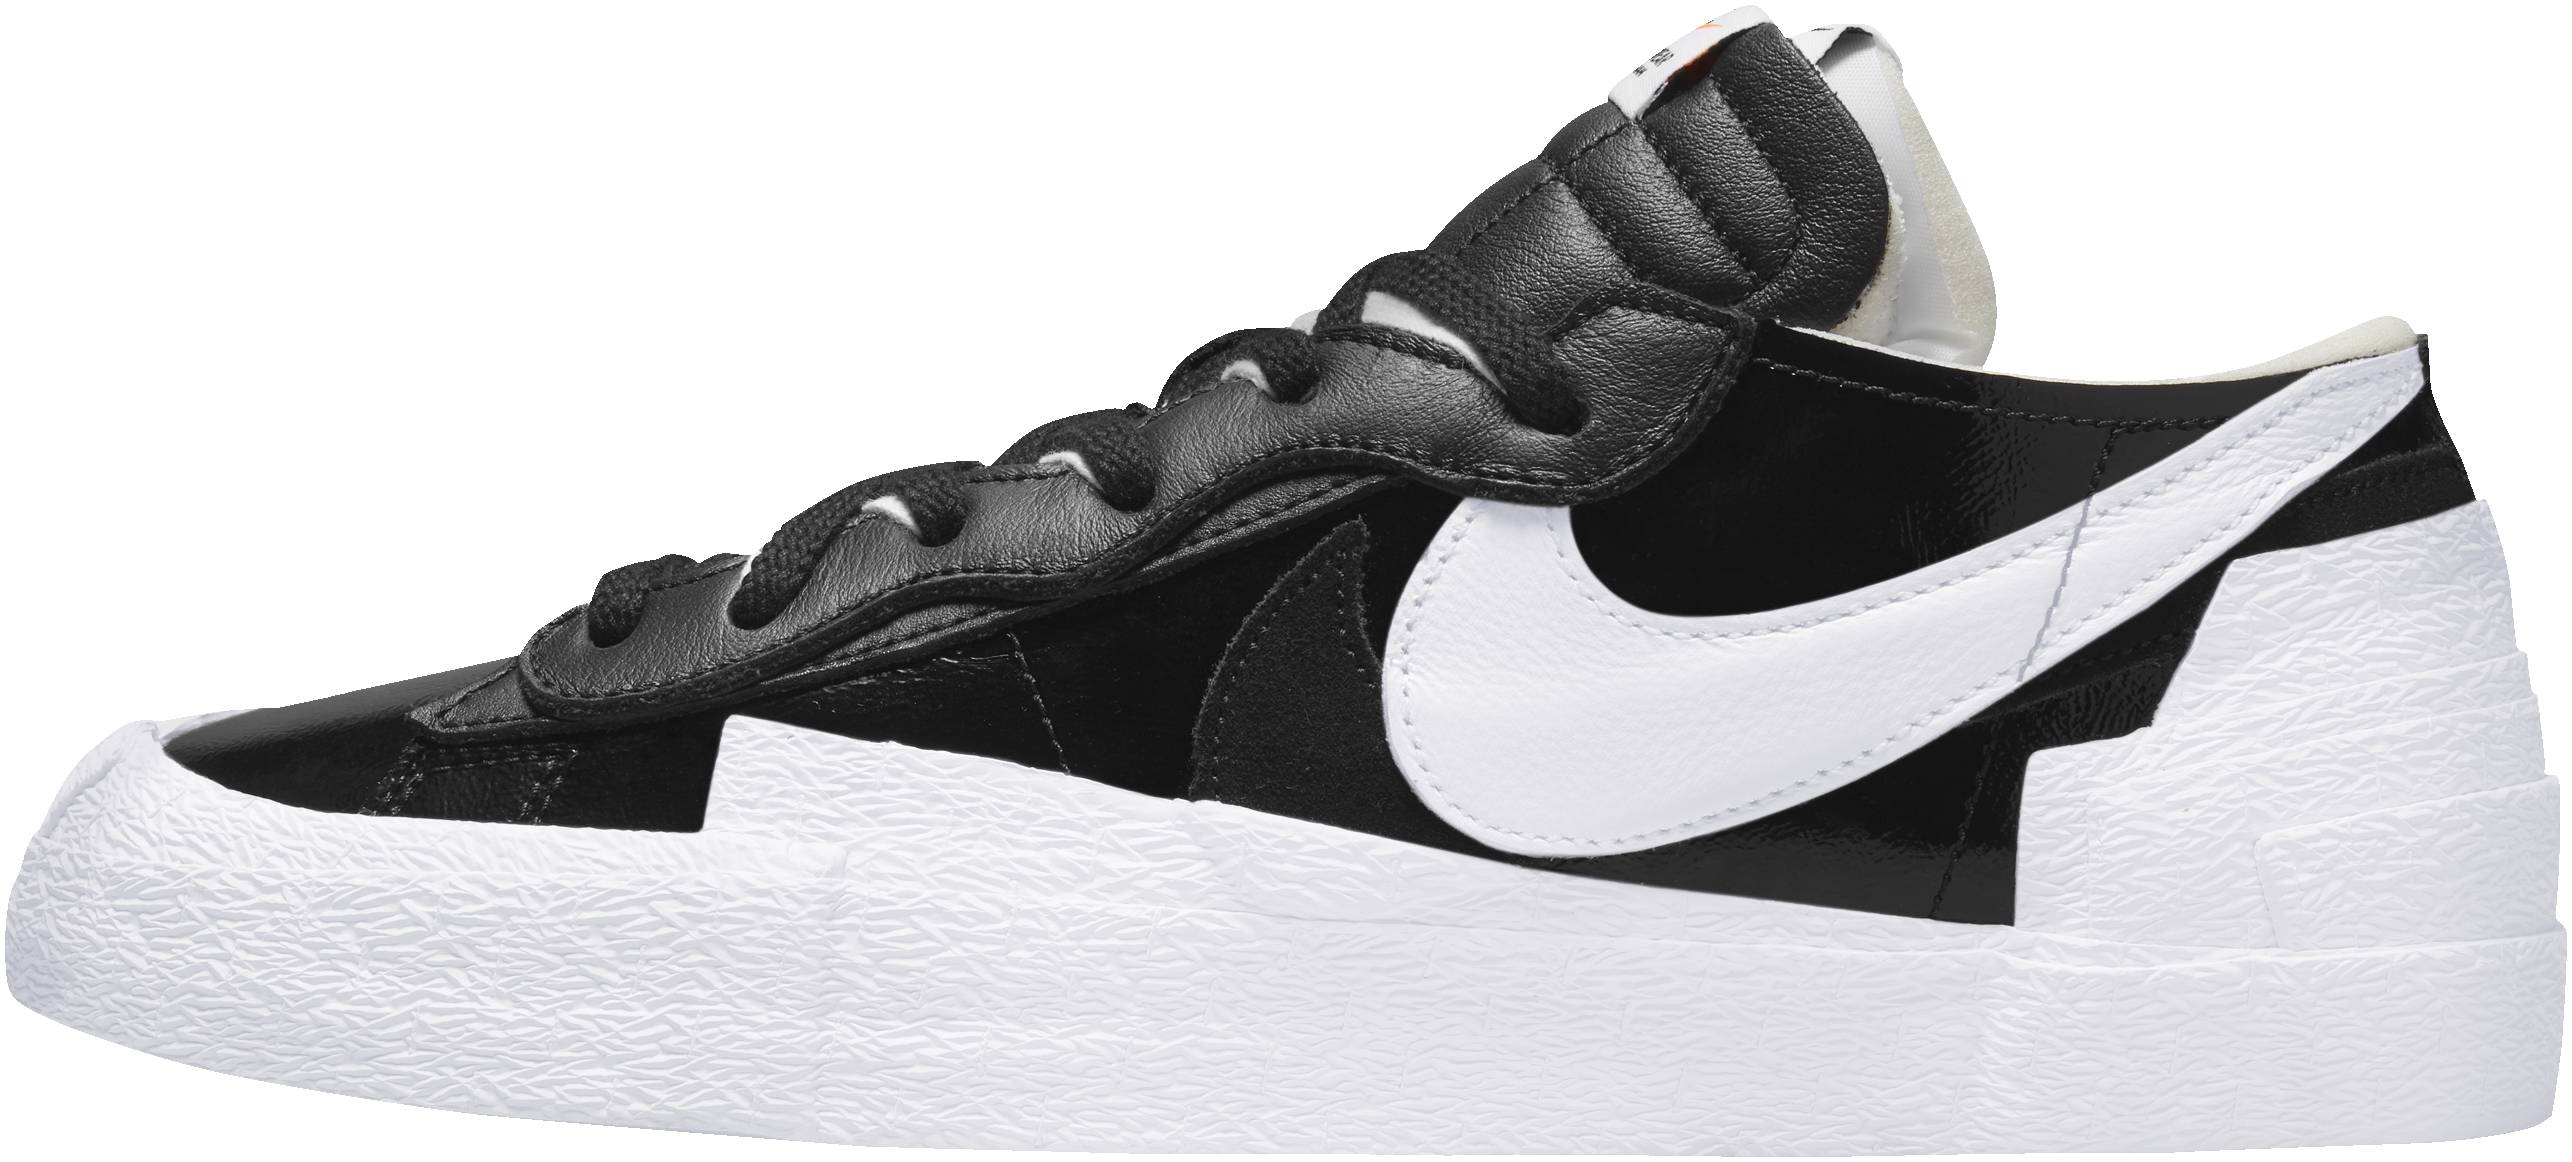 Nike x Sacai Blazer Low sneakers in black | RunRepeat